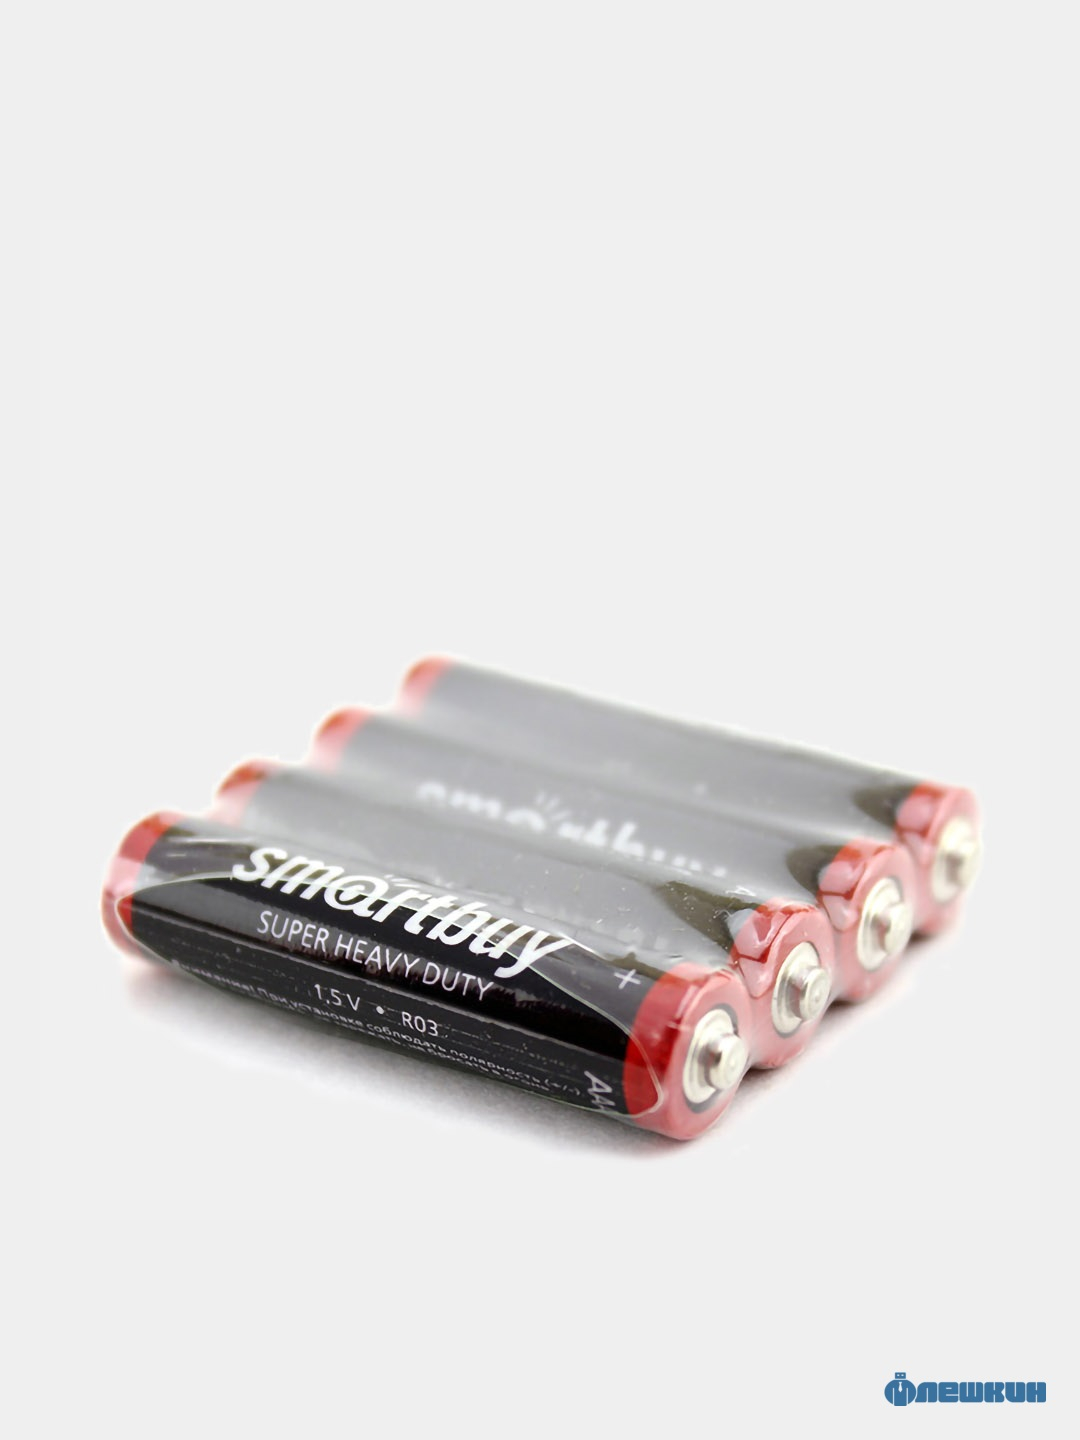 Ааа 1.5 v. Батарейка солевая SMARTBUY r03/4s SBBZ-3a04s. Батарейка солевая SMARTBUY r03/4s. Батарейка AAA r03. Батарейки r03 AAA 1.5V.